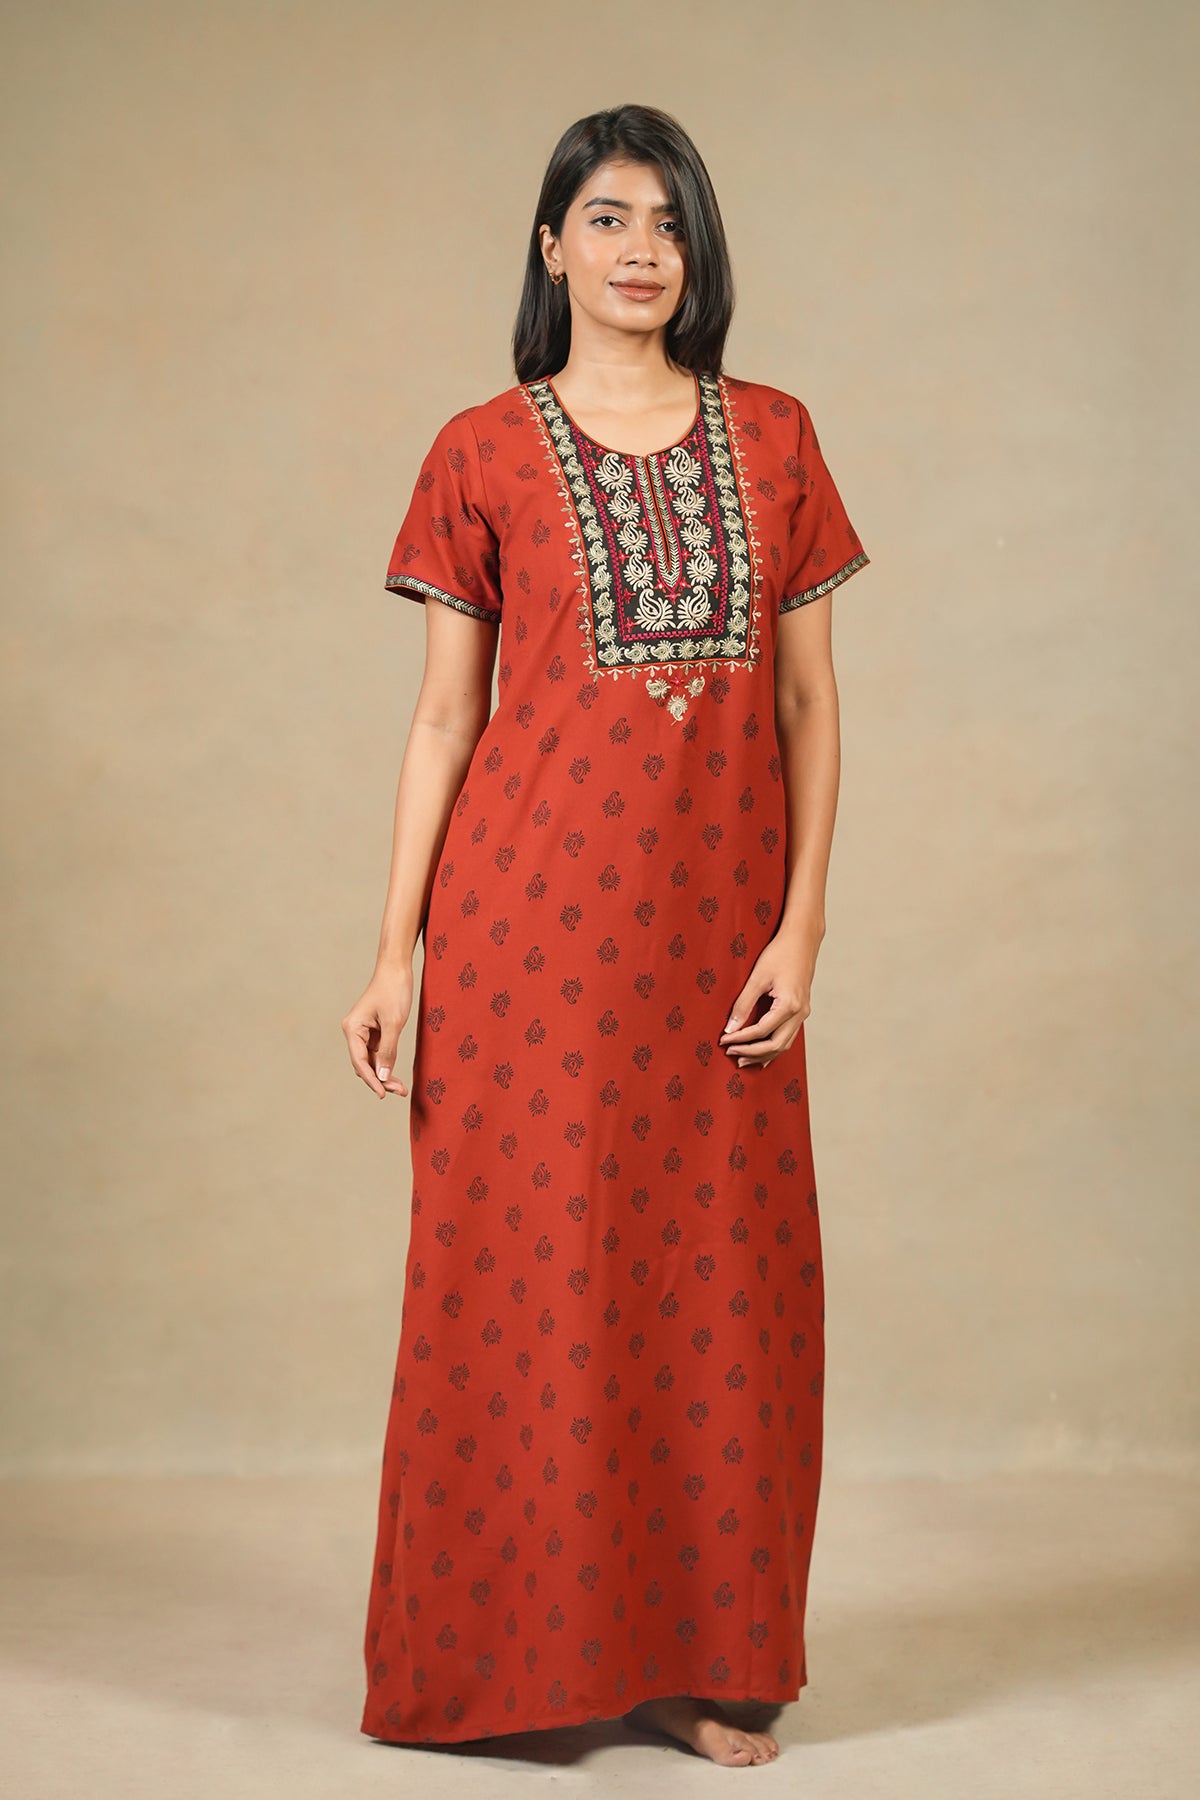 Embroidered Ladies Designer Nighty, Free Size at Rs 799/piece in Kalyan